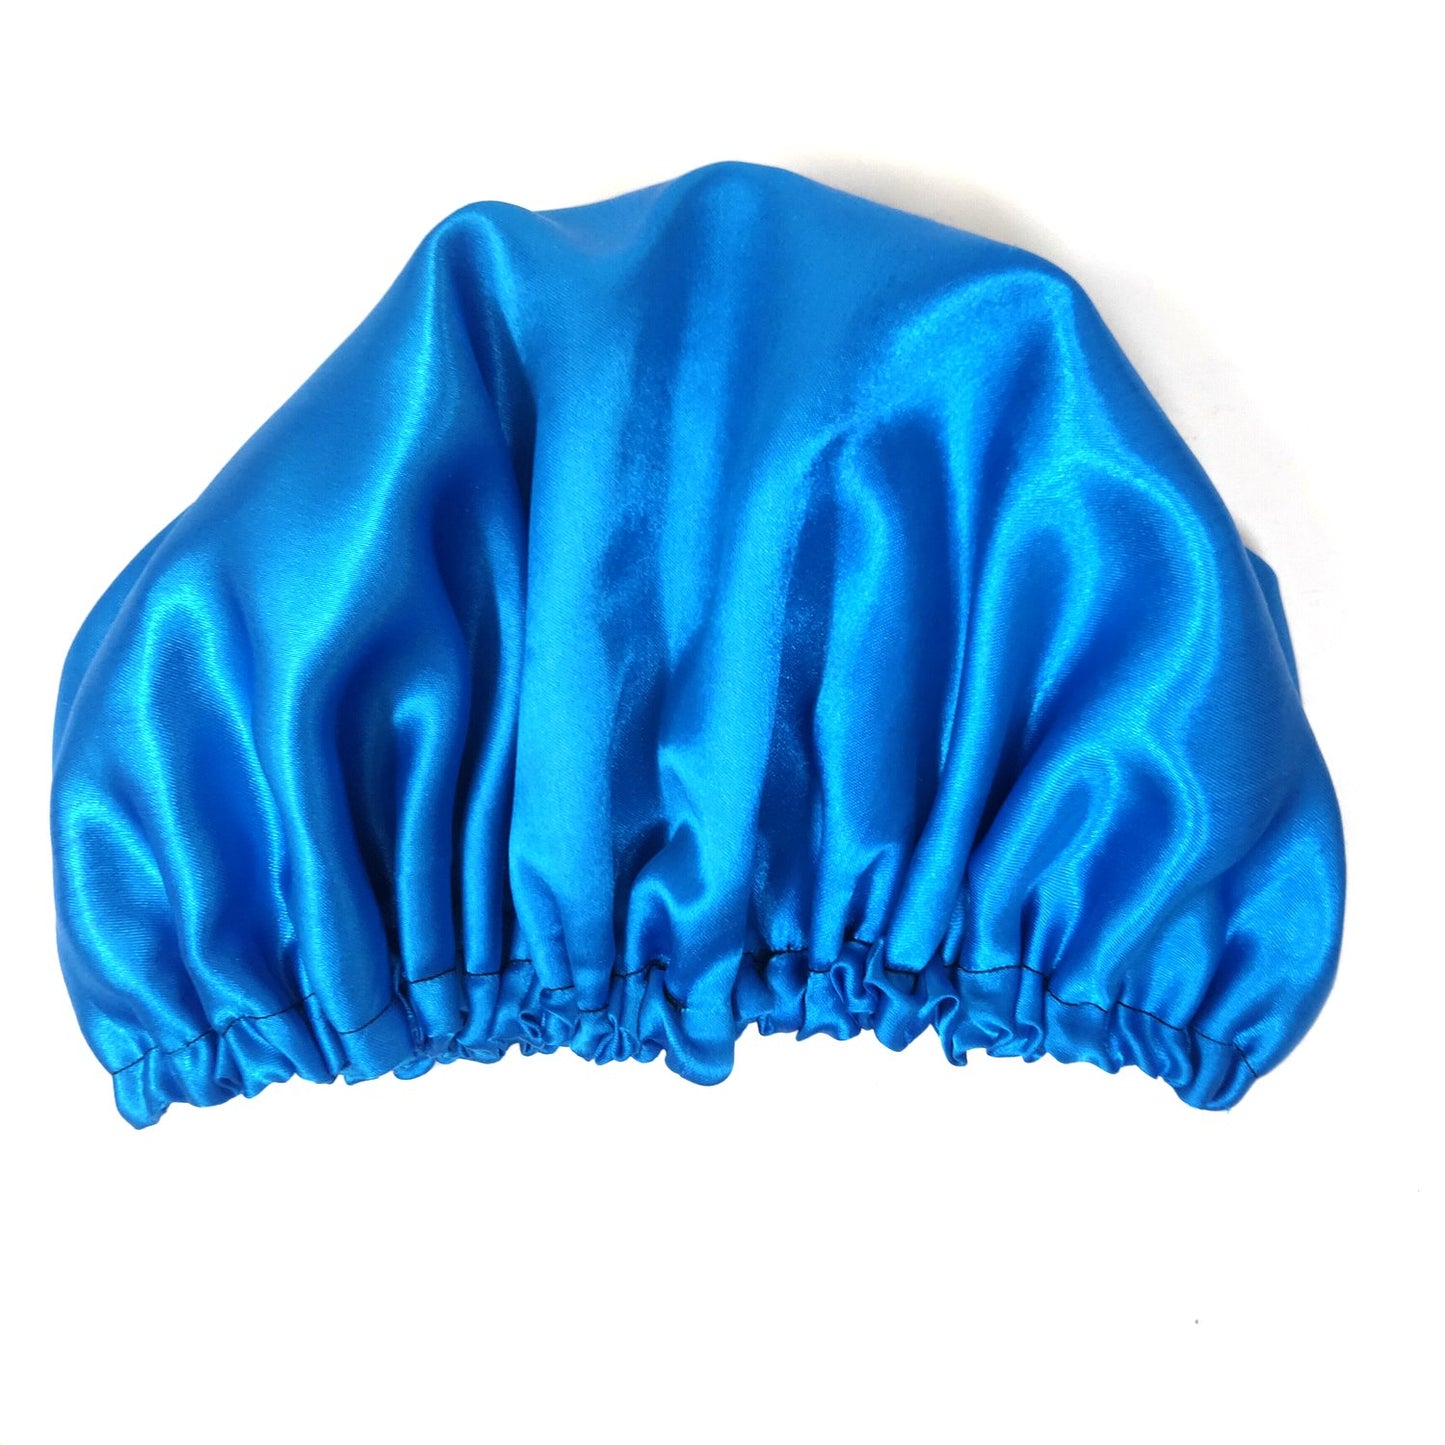 Anokhi Ada Handmade Satin Hair Bonnet Sleep Cap (36-02, Navy Blue)